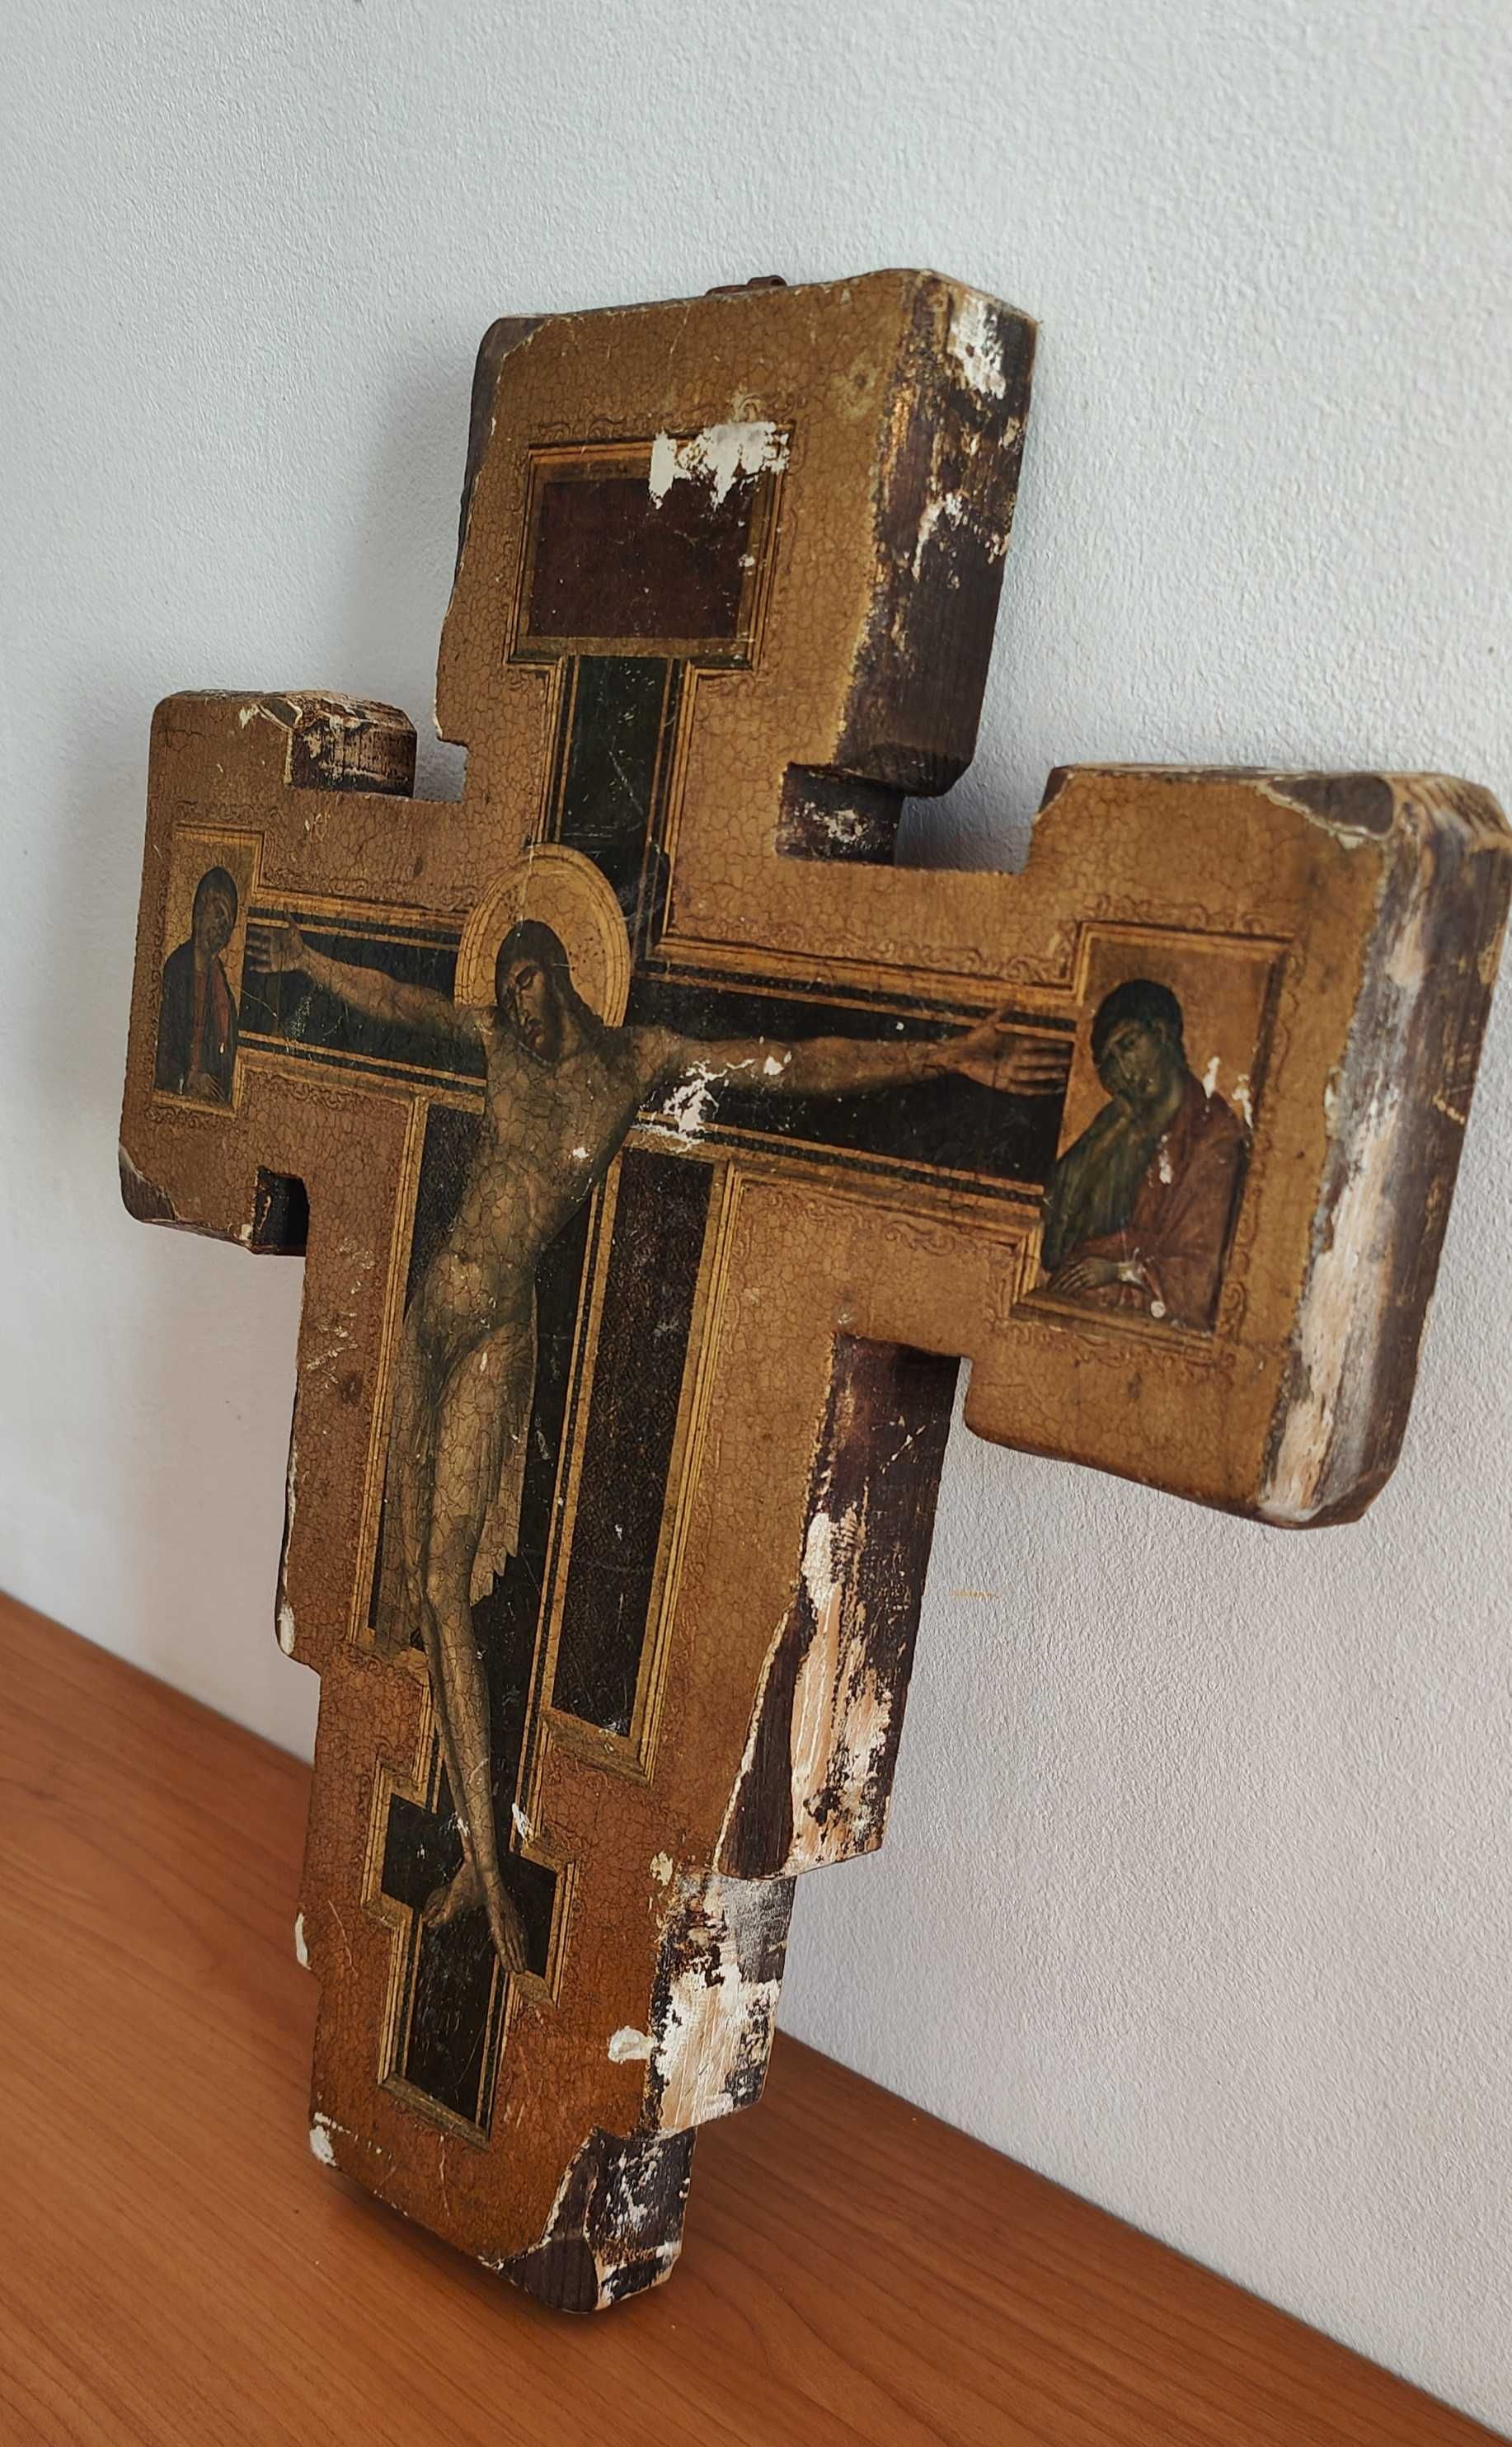 Crucifix (Cimabue, La Santa Croce)